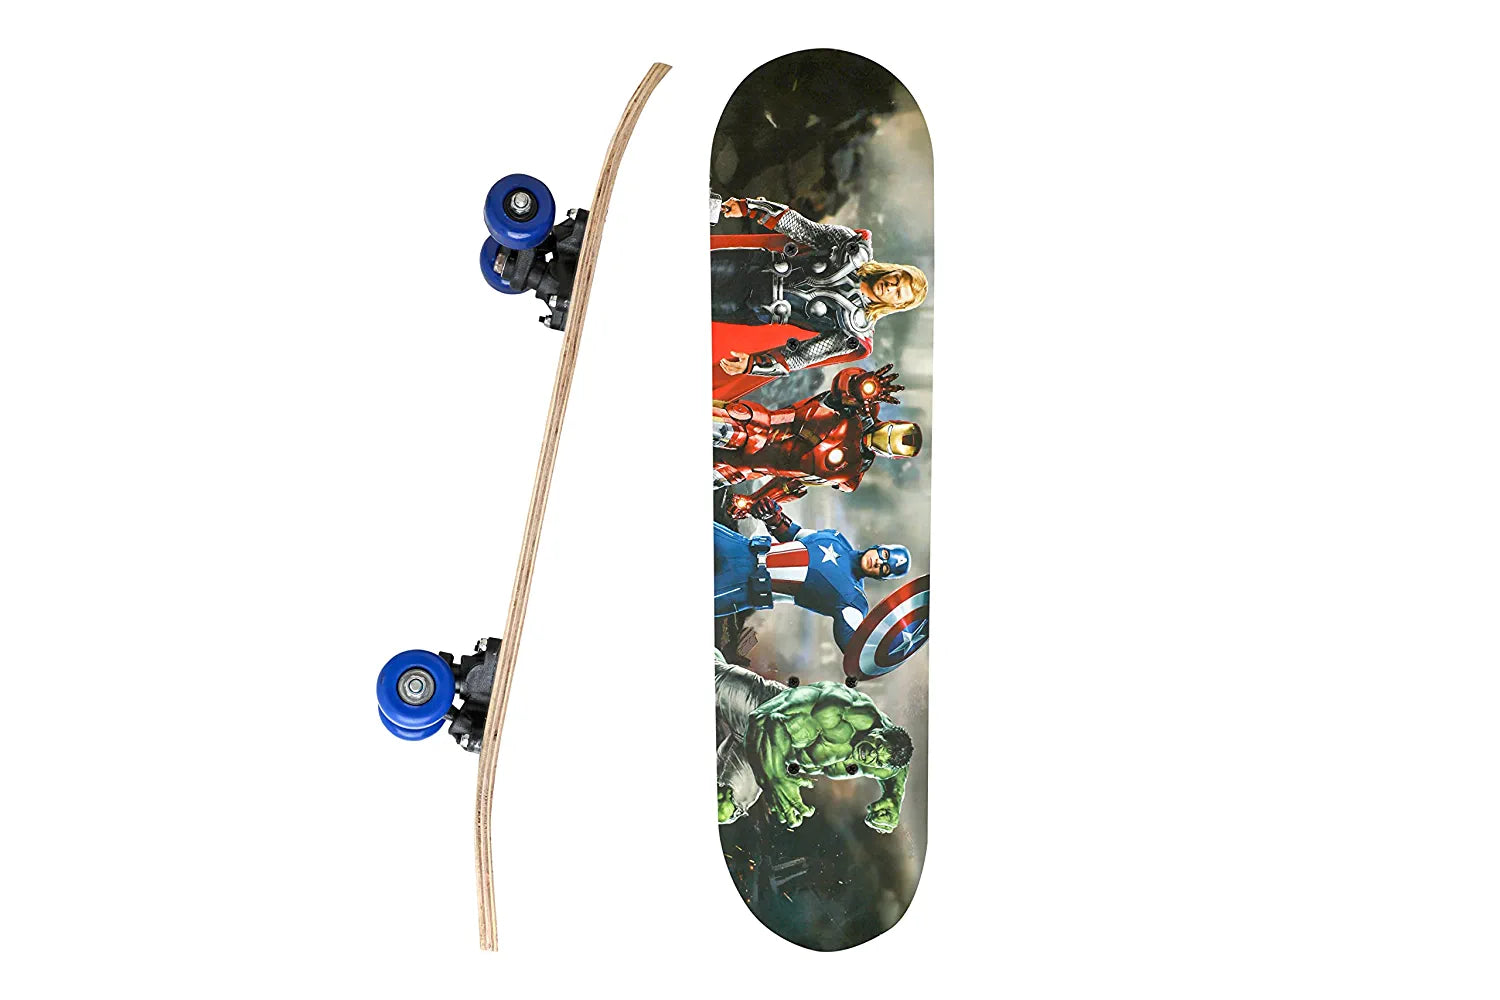 Sell Pluse Double Kick Skate Board